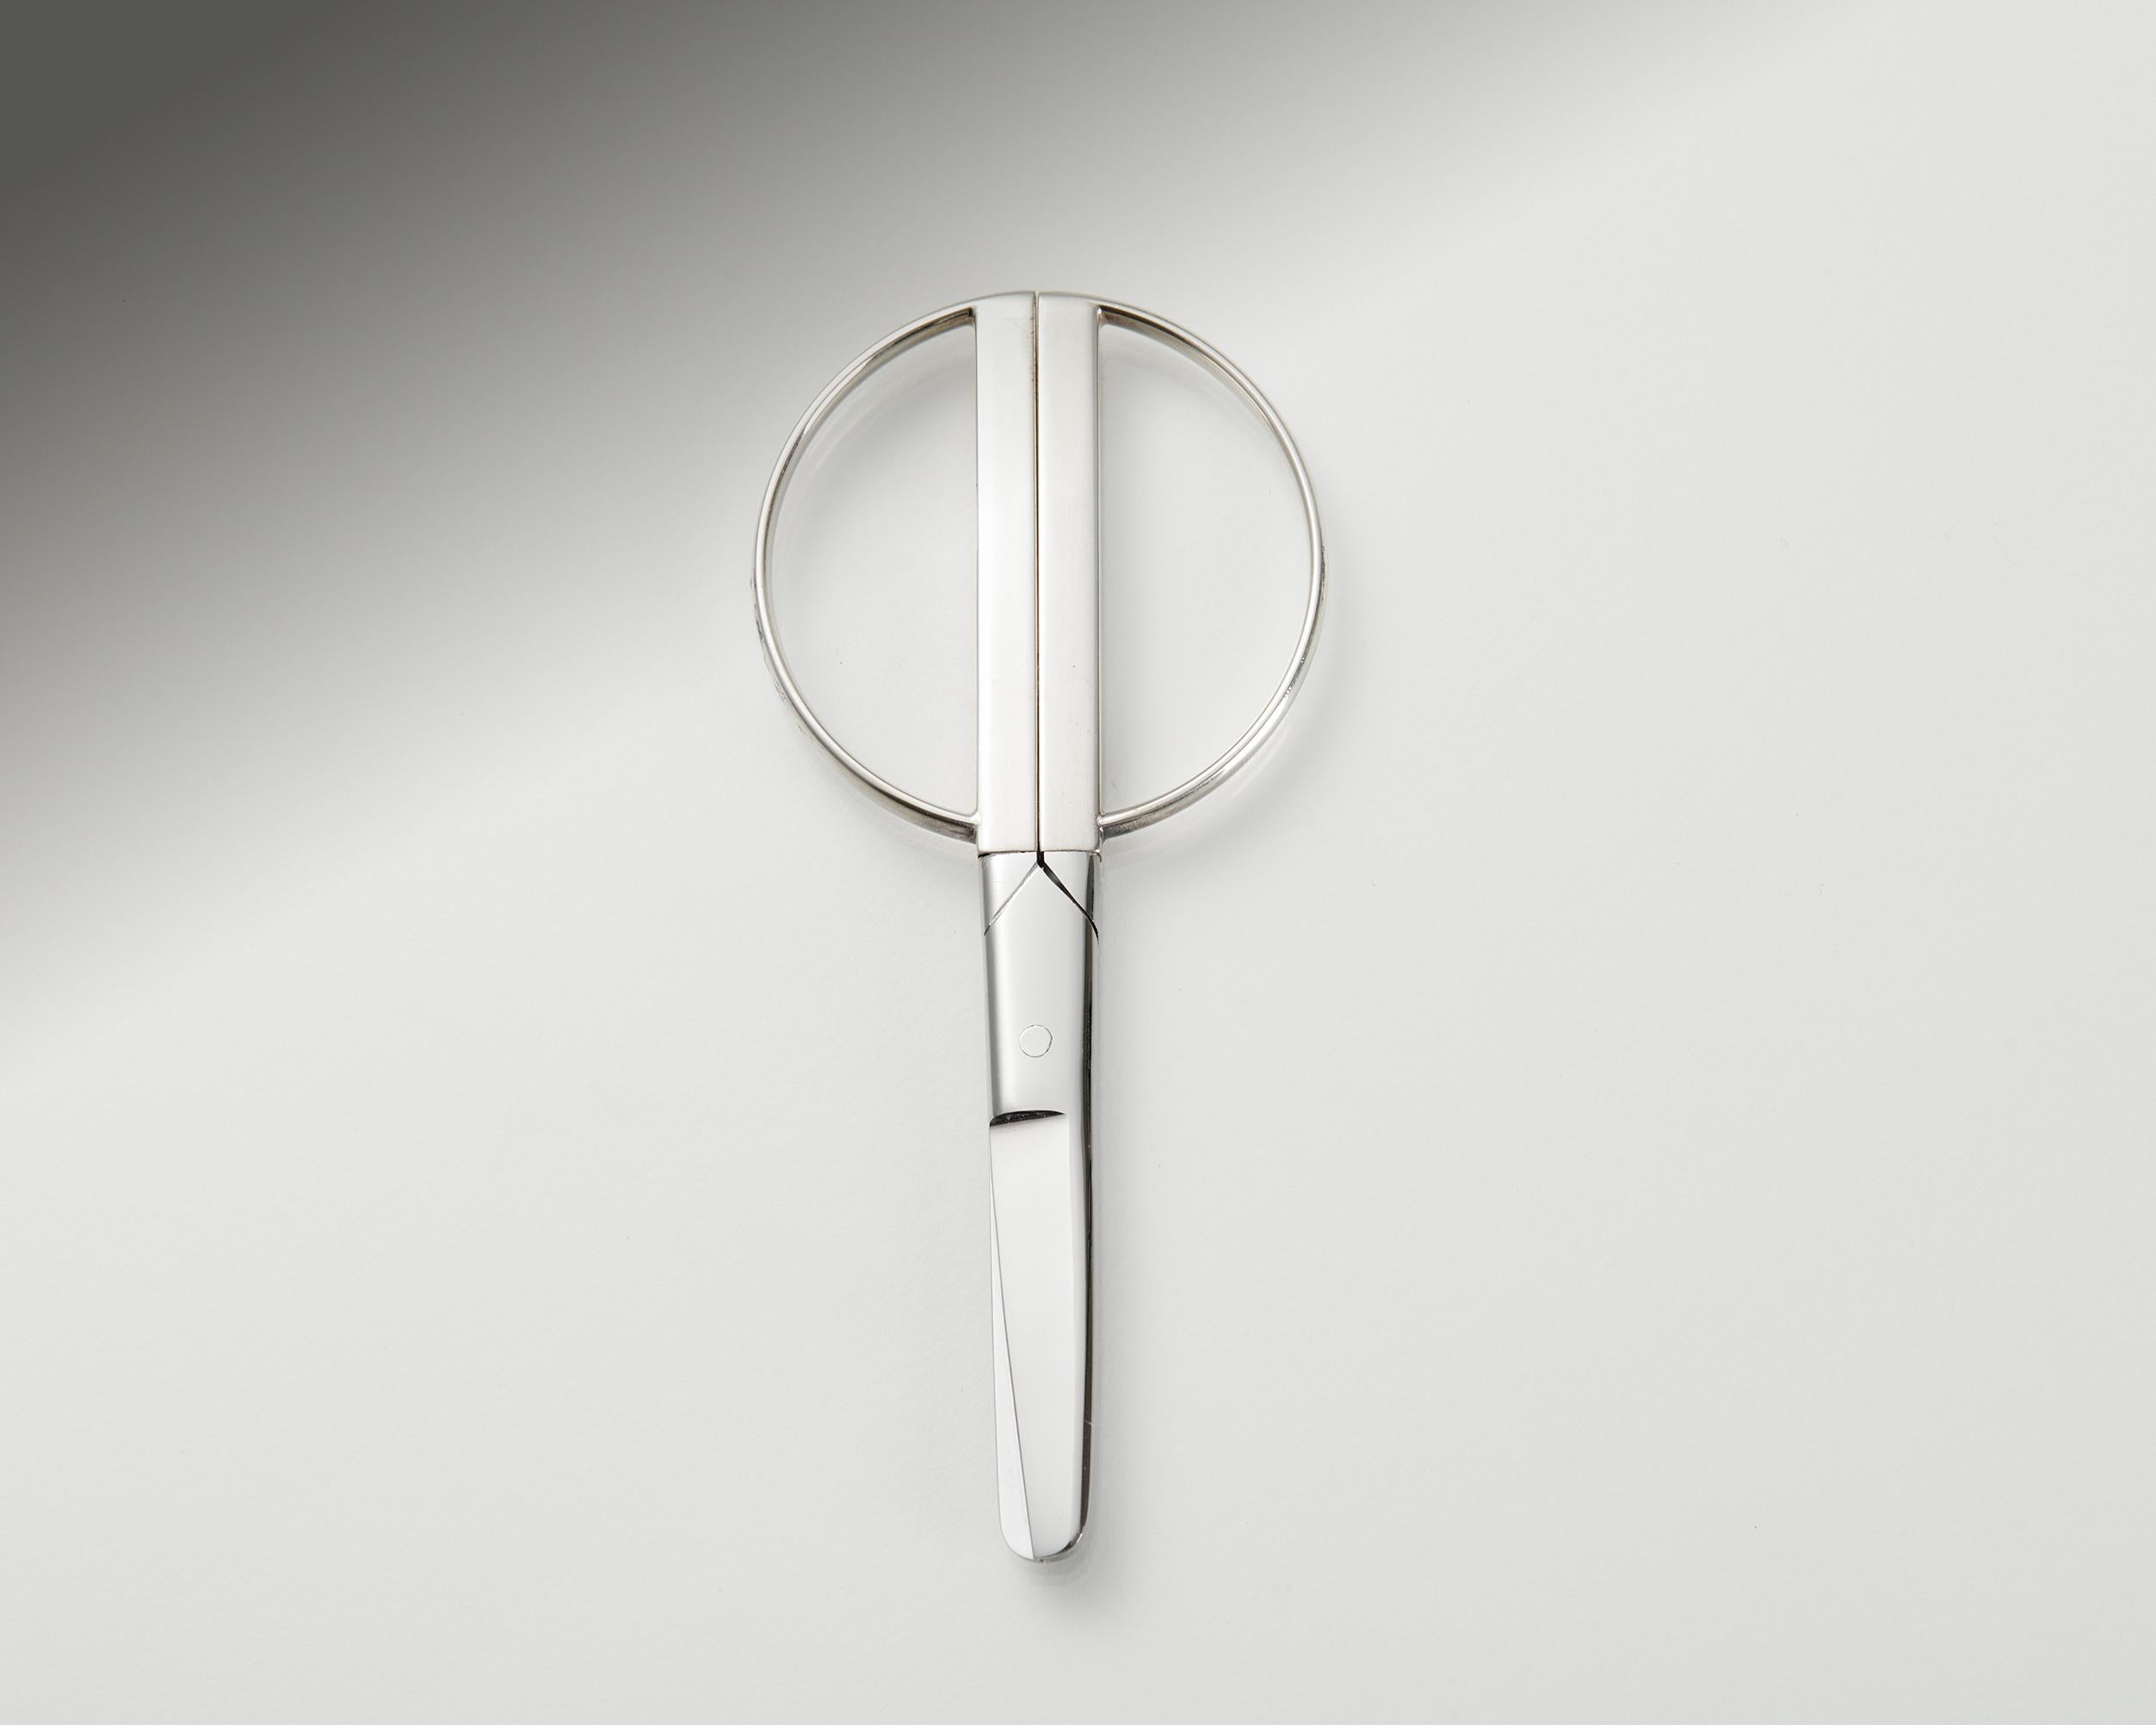 Grape scissors designed by Georg Jensen,
Denmark, 1960s.

Sterling silver.

Stamped.

L: 13 cm
W: 5.5 cm